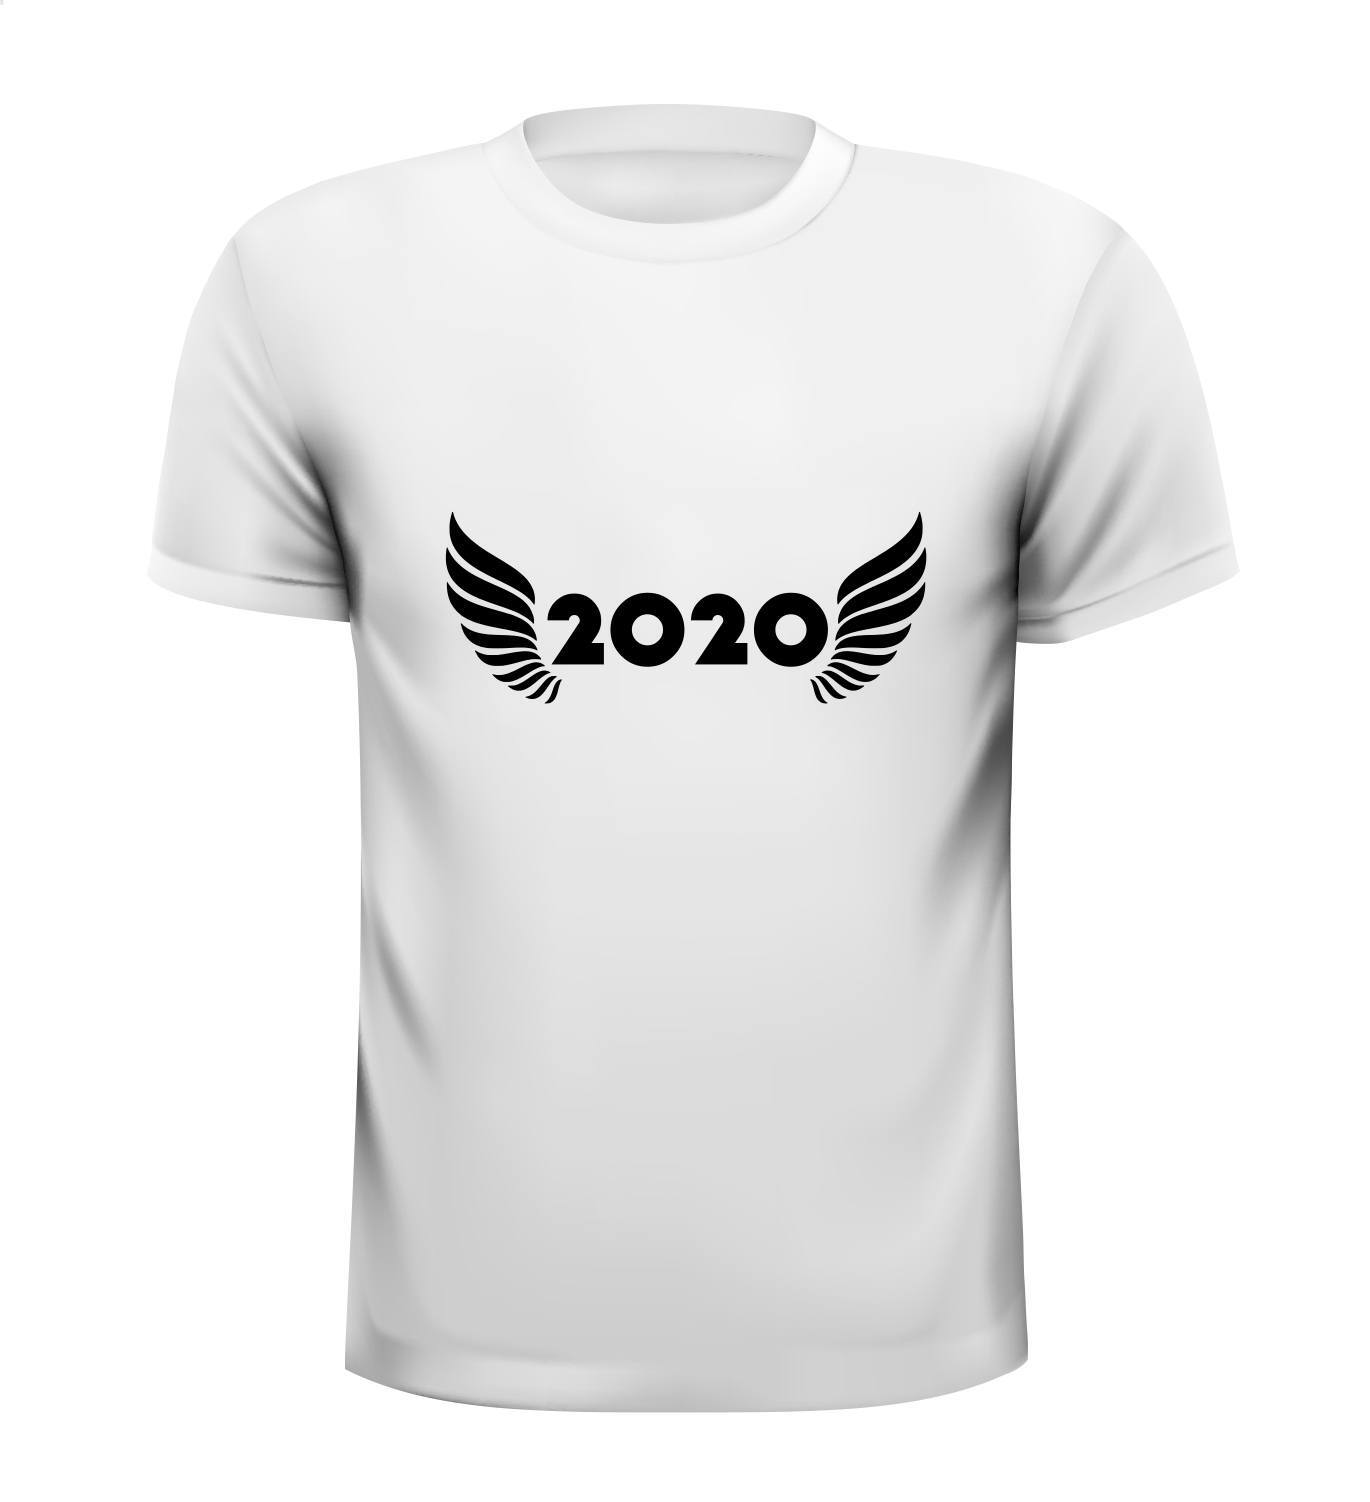 2020 jaartal t-shirt